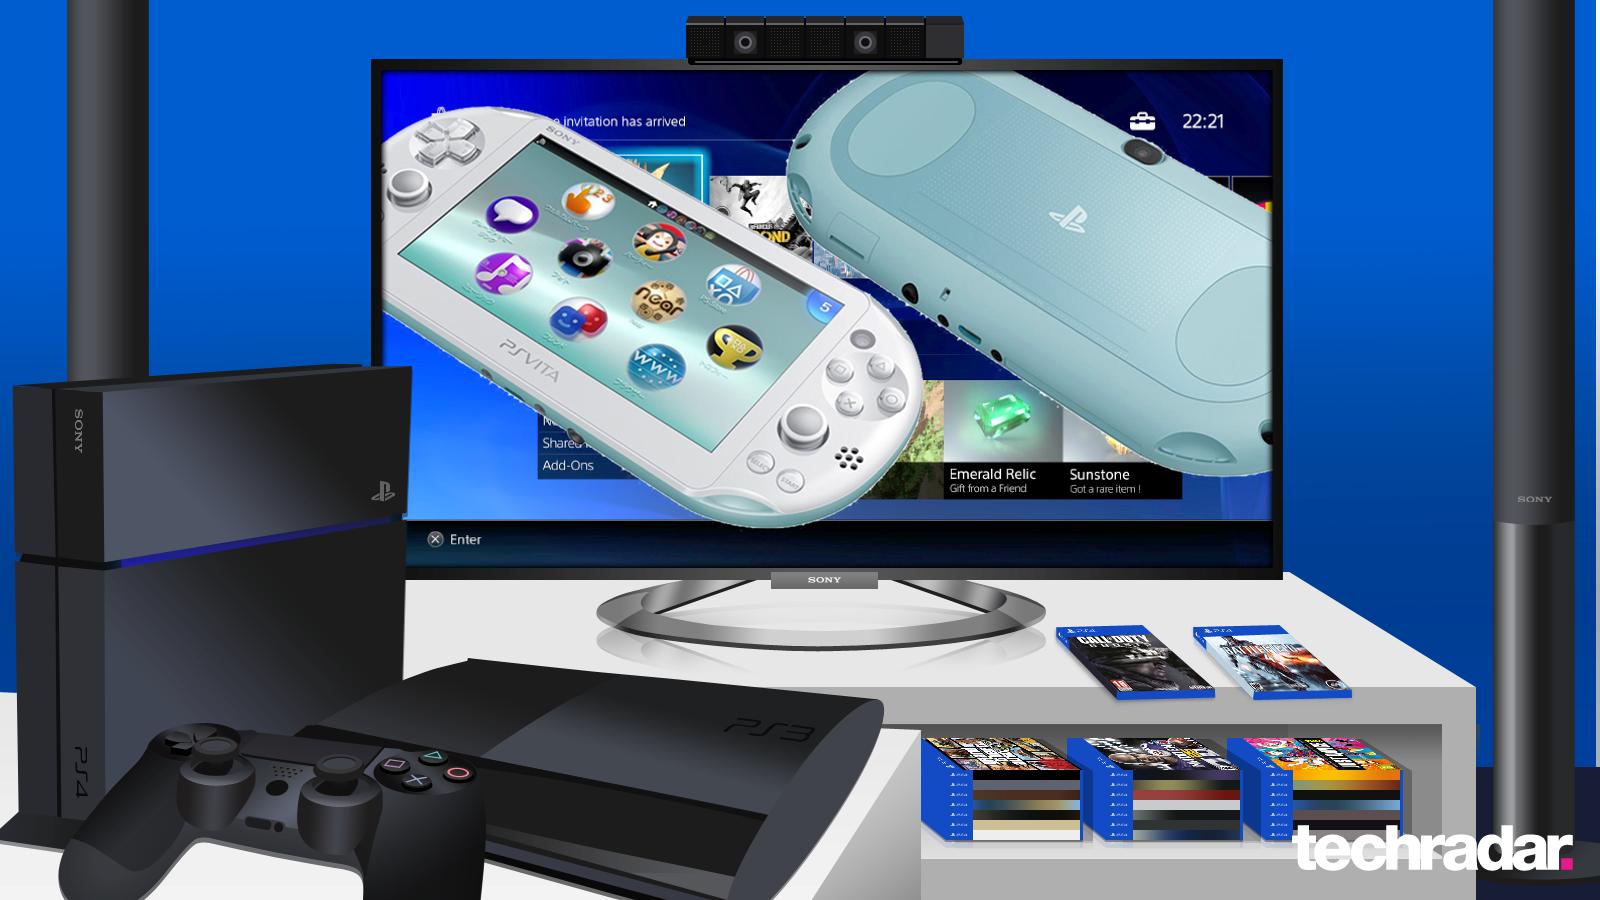 Will the PS Vita Slim be Sony's final handheld games console? TechRadar